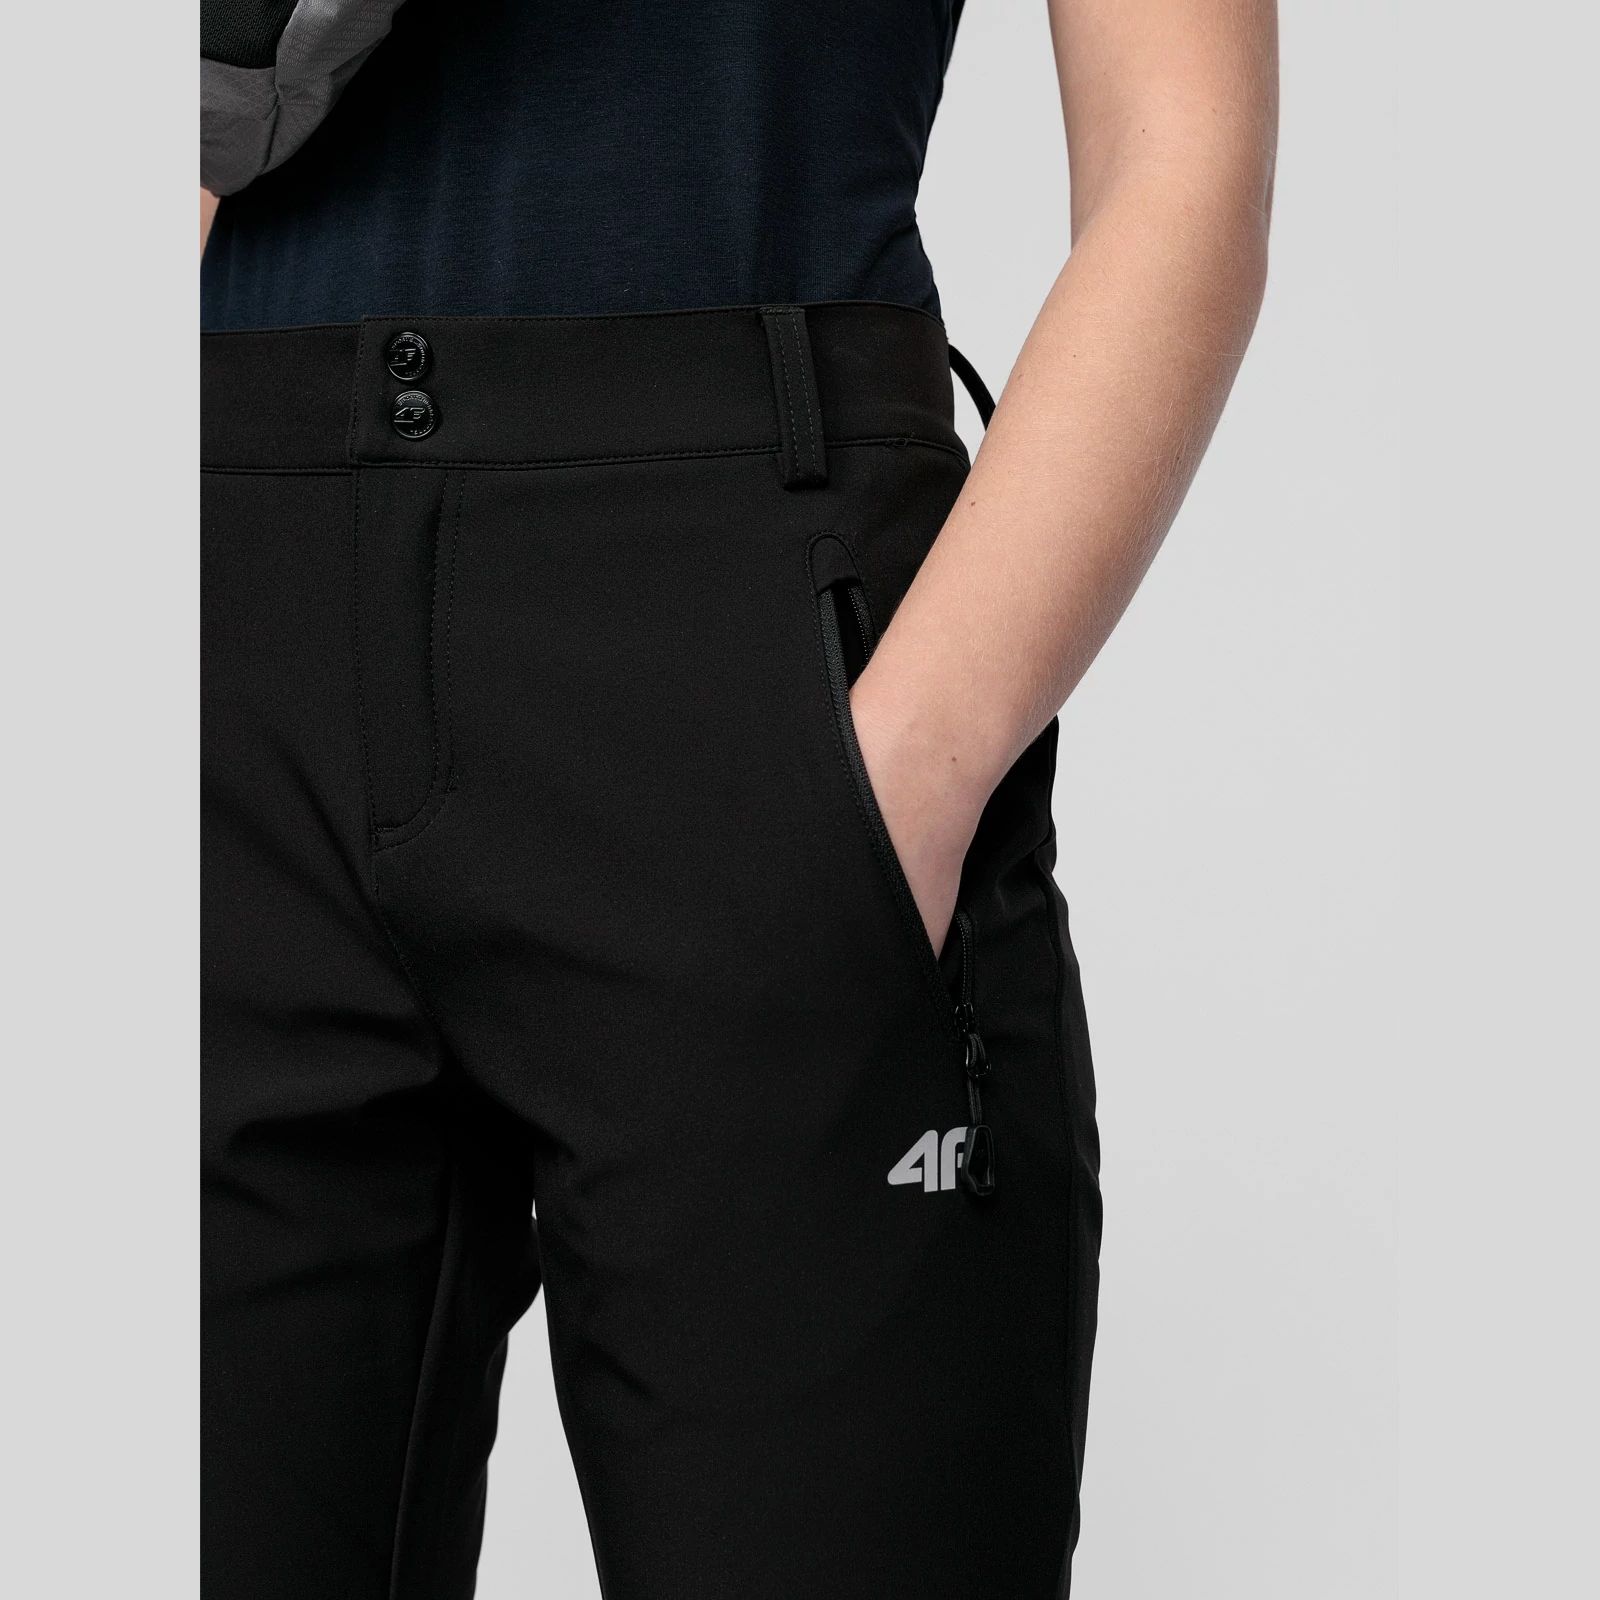 Pantaloni Lungi -  4f Pantaloni pentru femei SPDT001